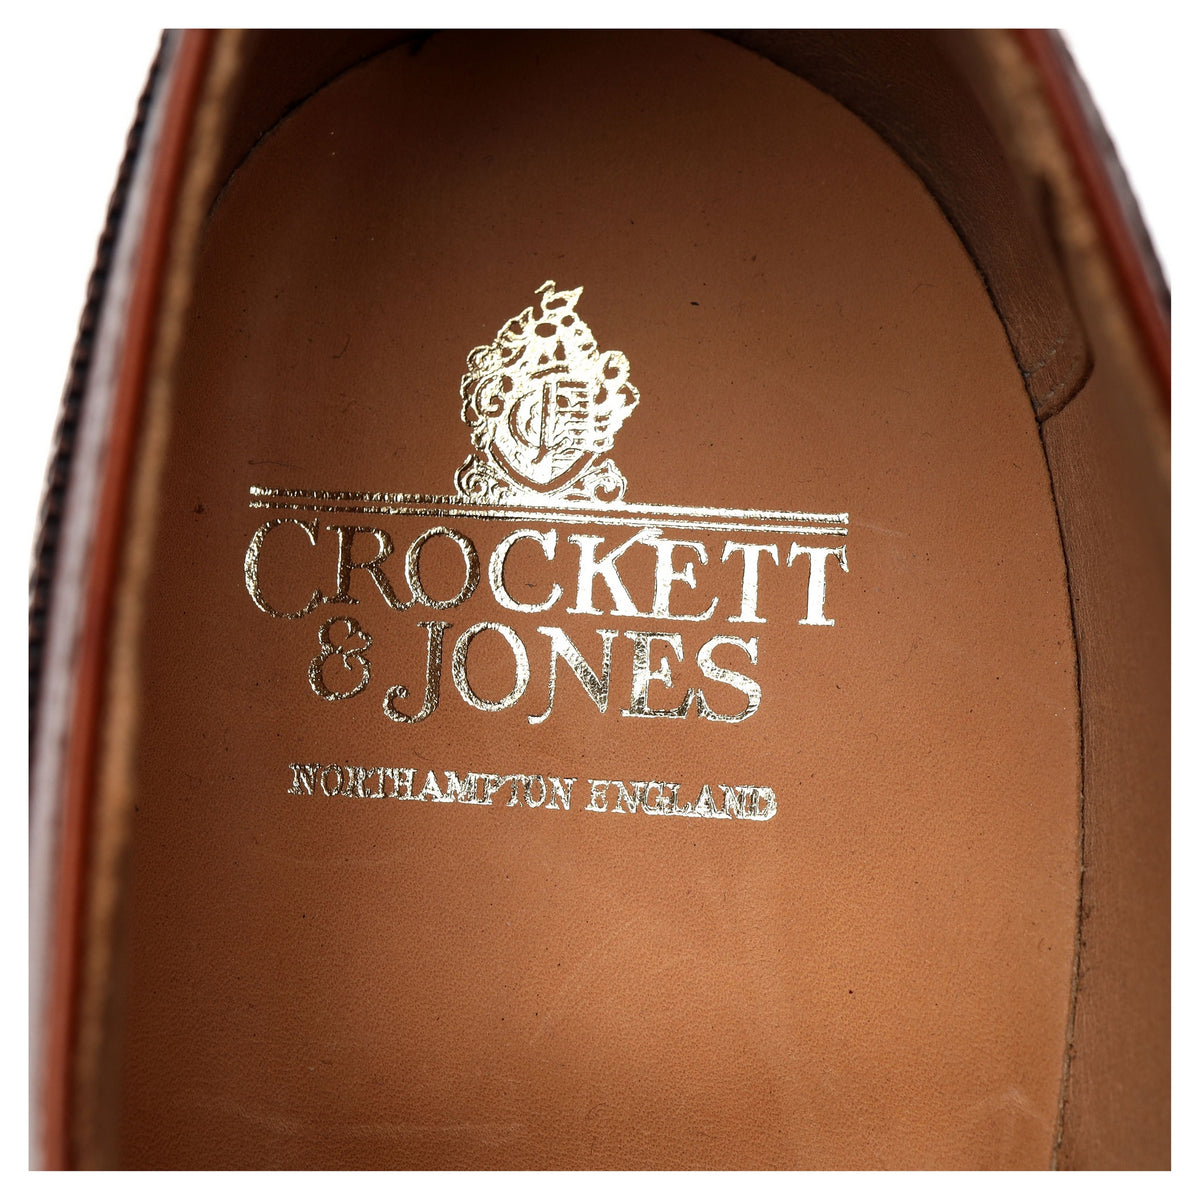 Tan Brown Leather Oxford Brogues UK 10 US 11